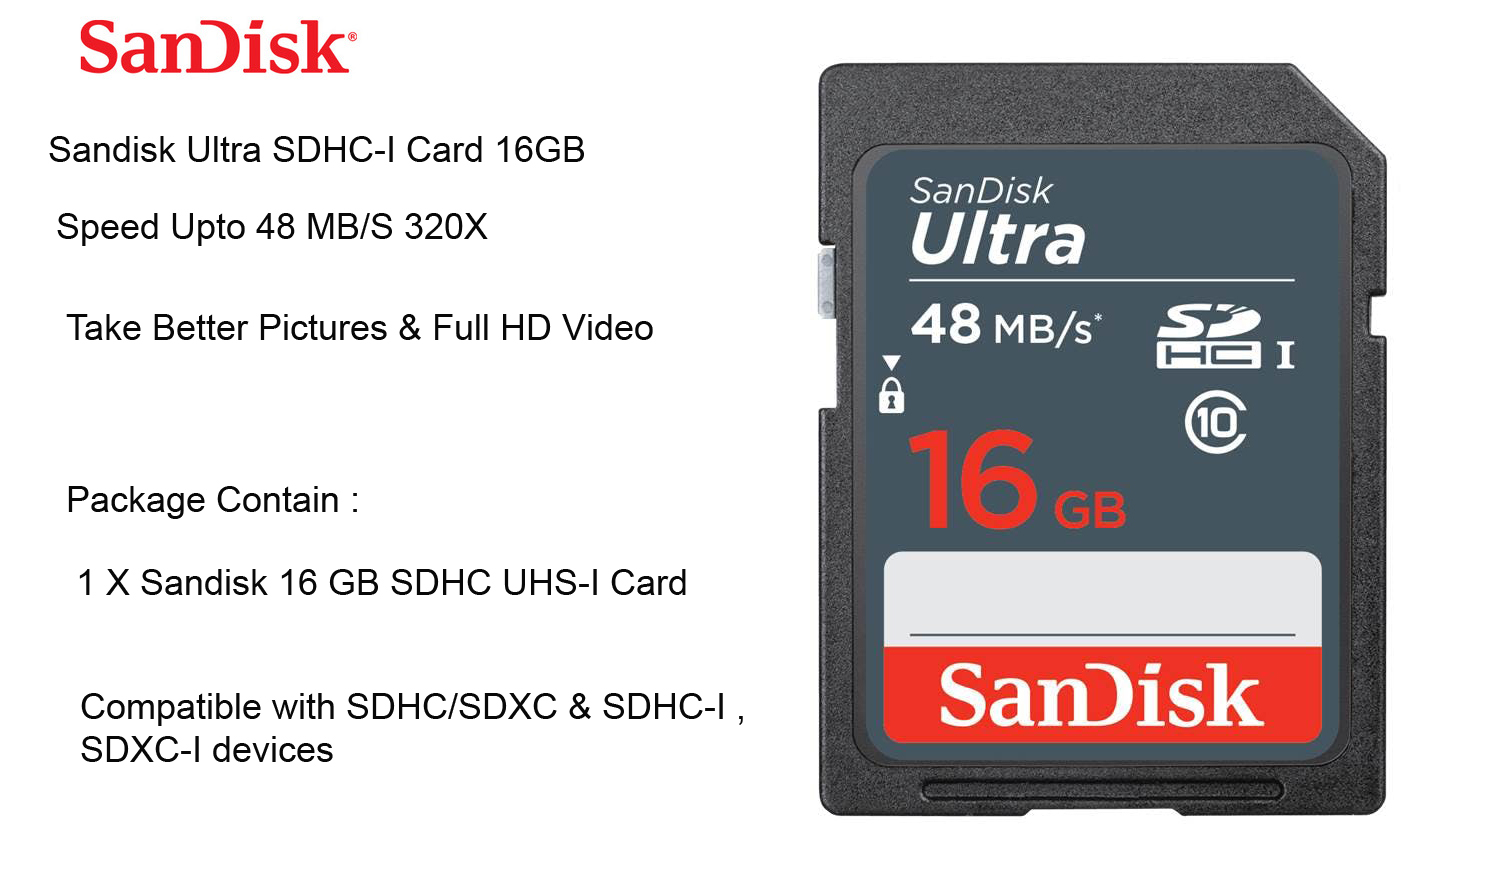 Sandisk Ultra SDHC UHS-1 Card 16GB